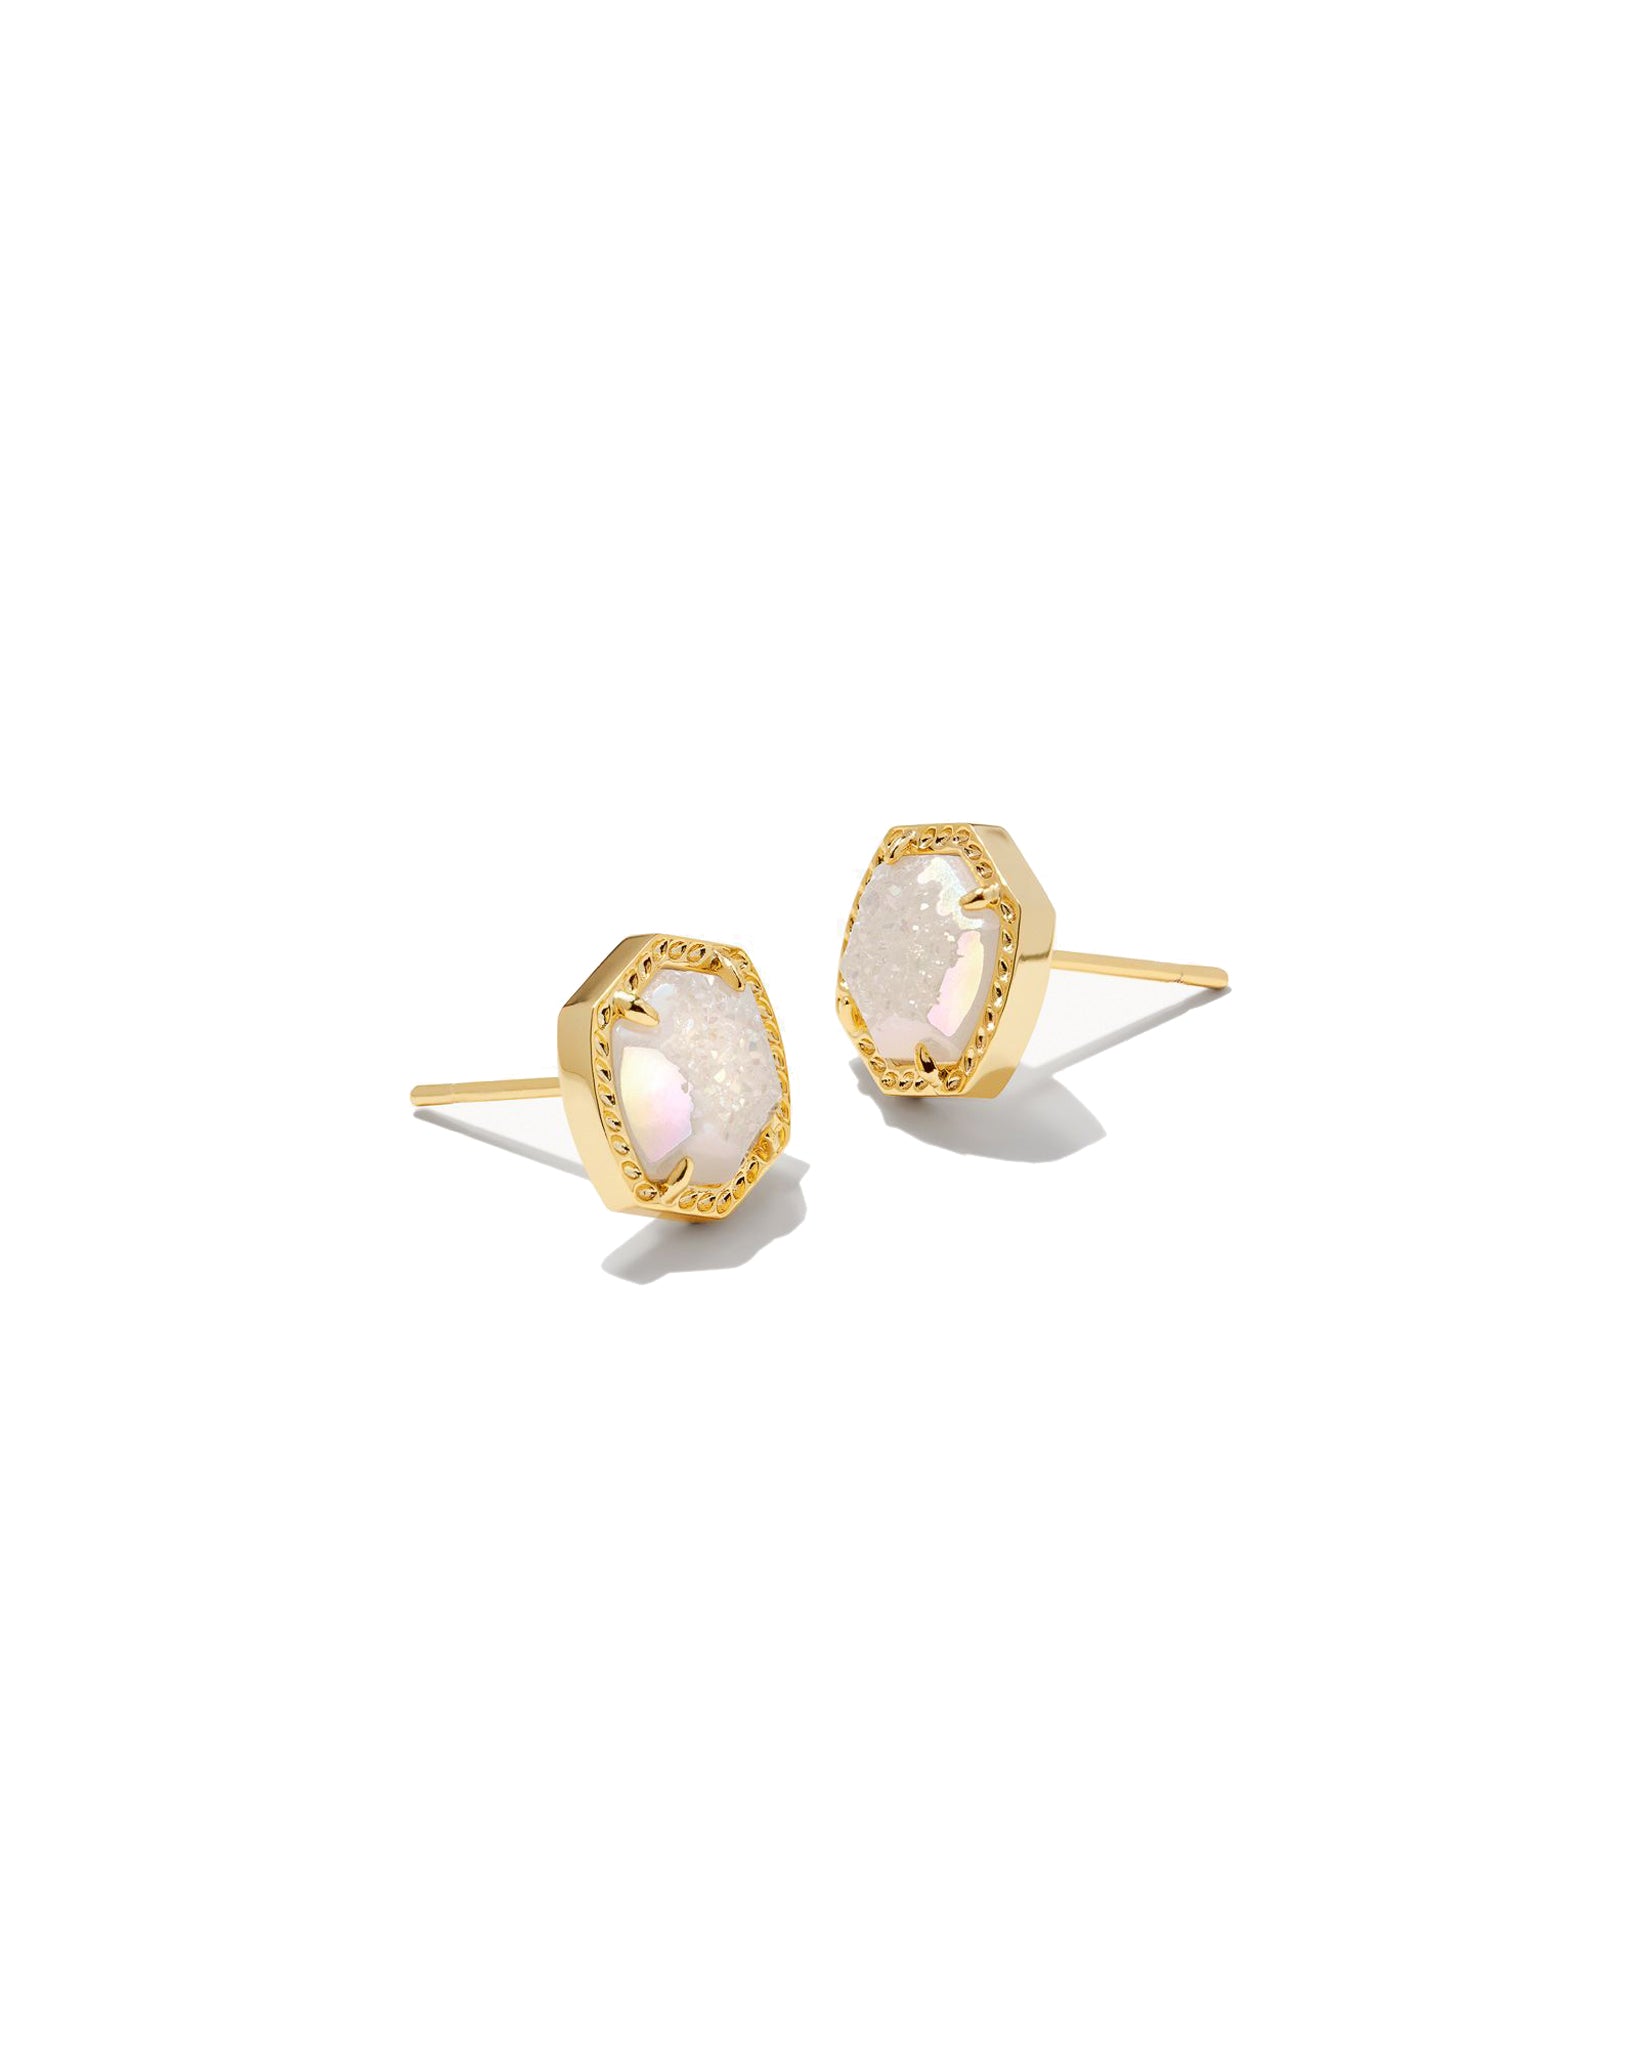 Kendra Scott Davie Stud Earrings in Iridescent Drusy and Gold